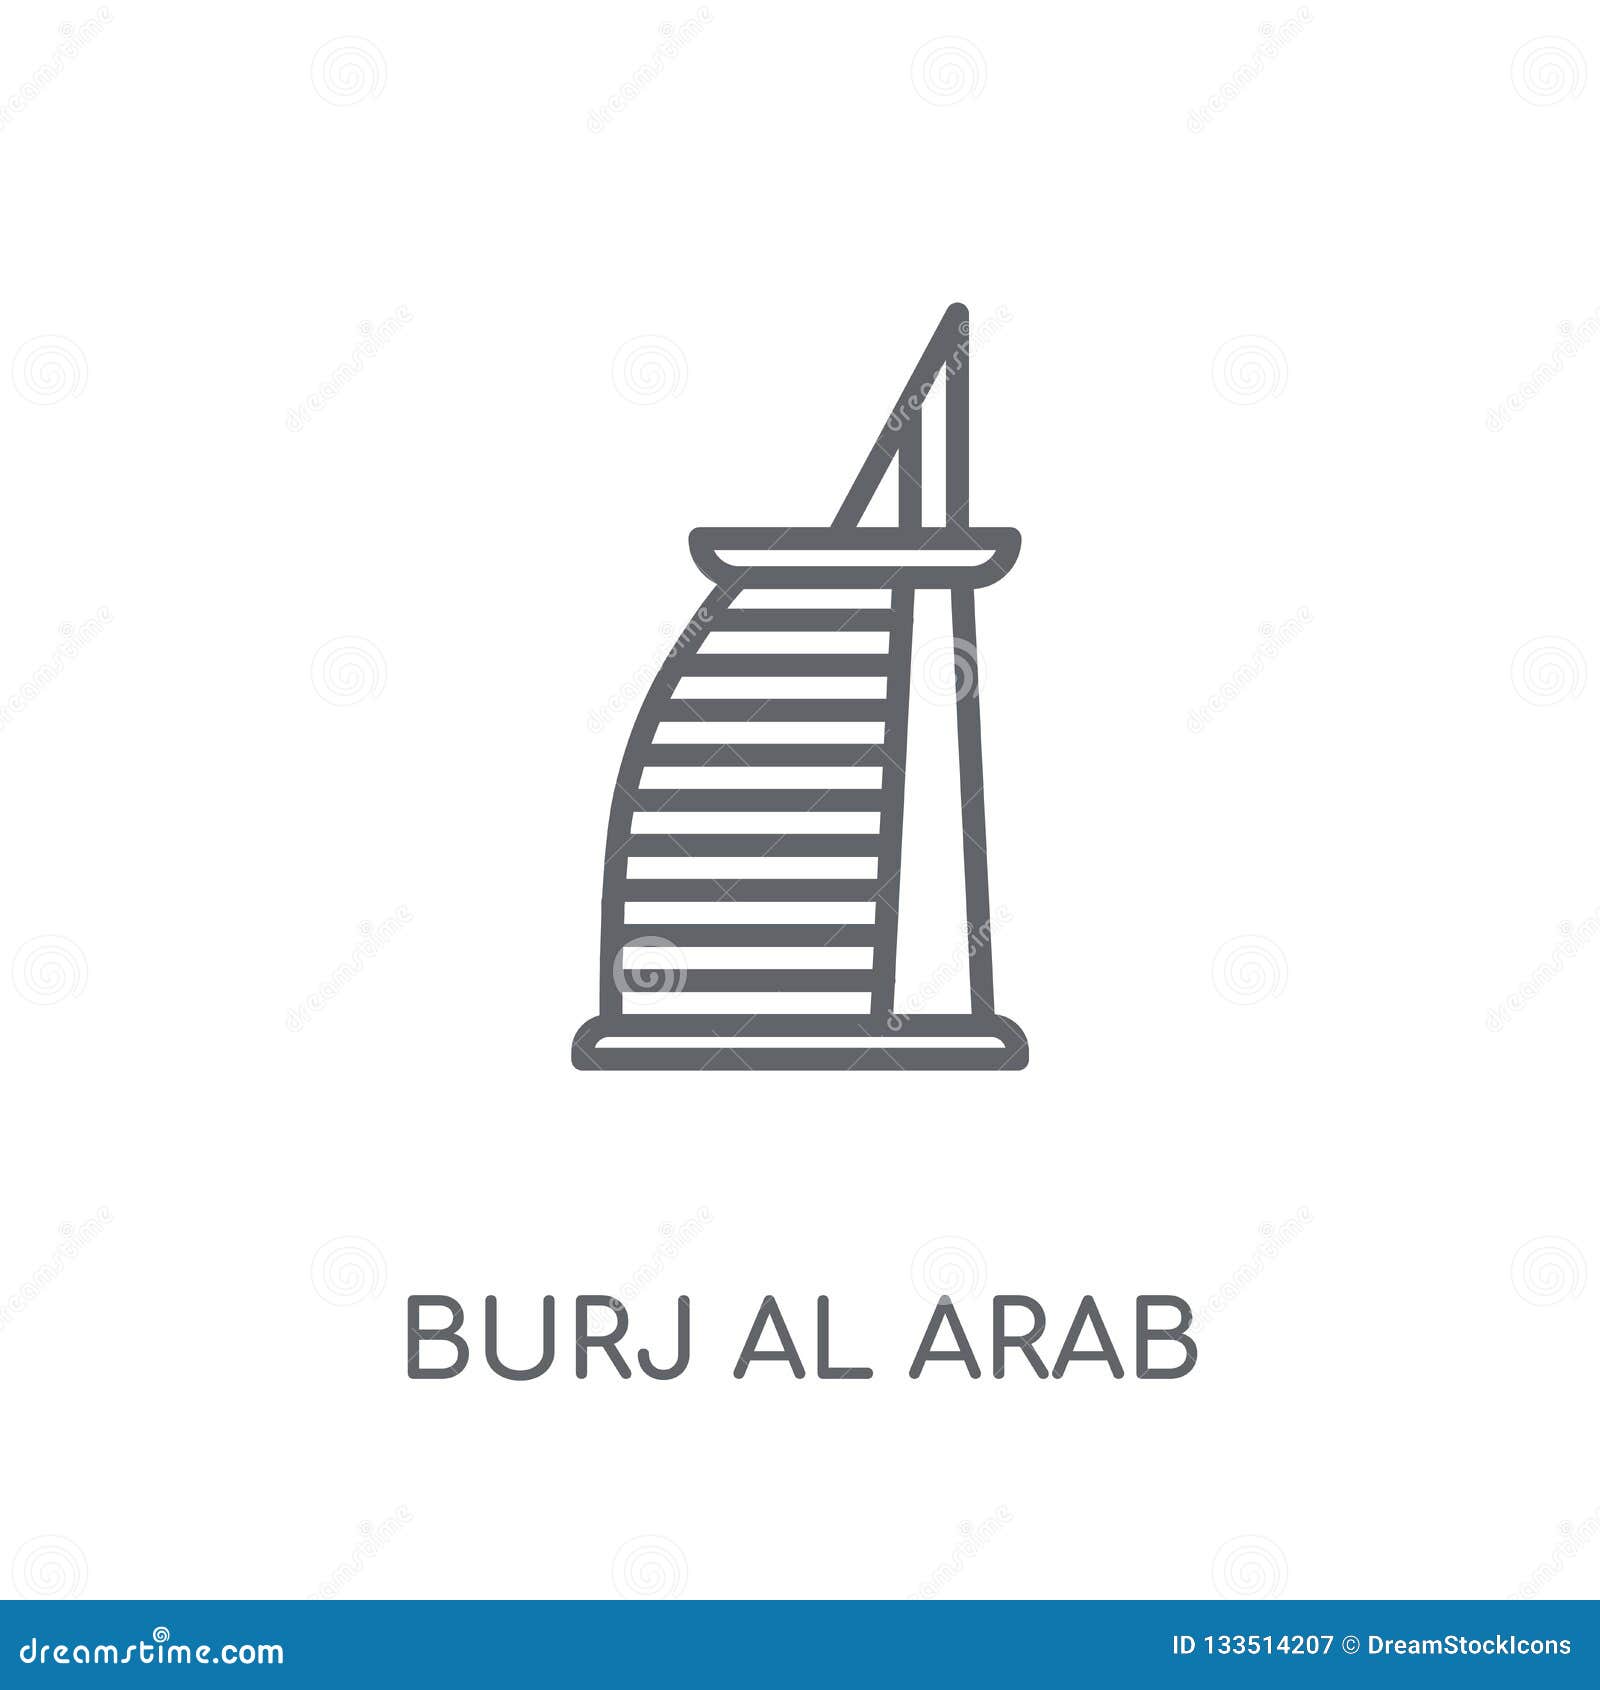 travel logo burj al arab